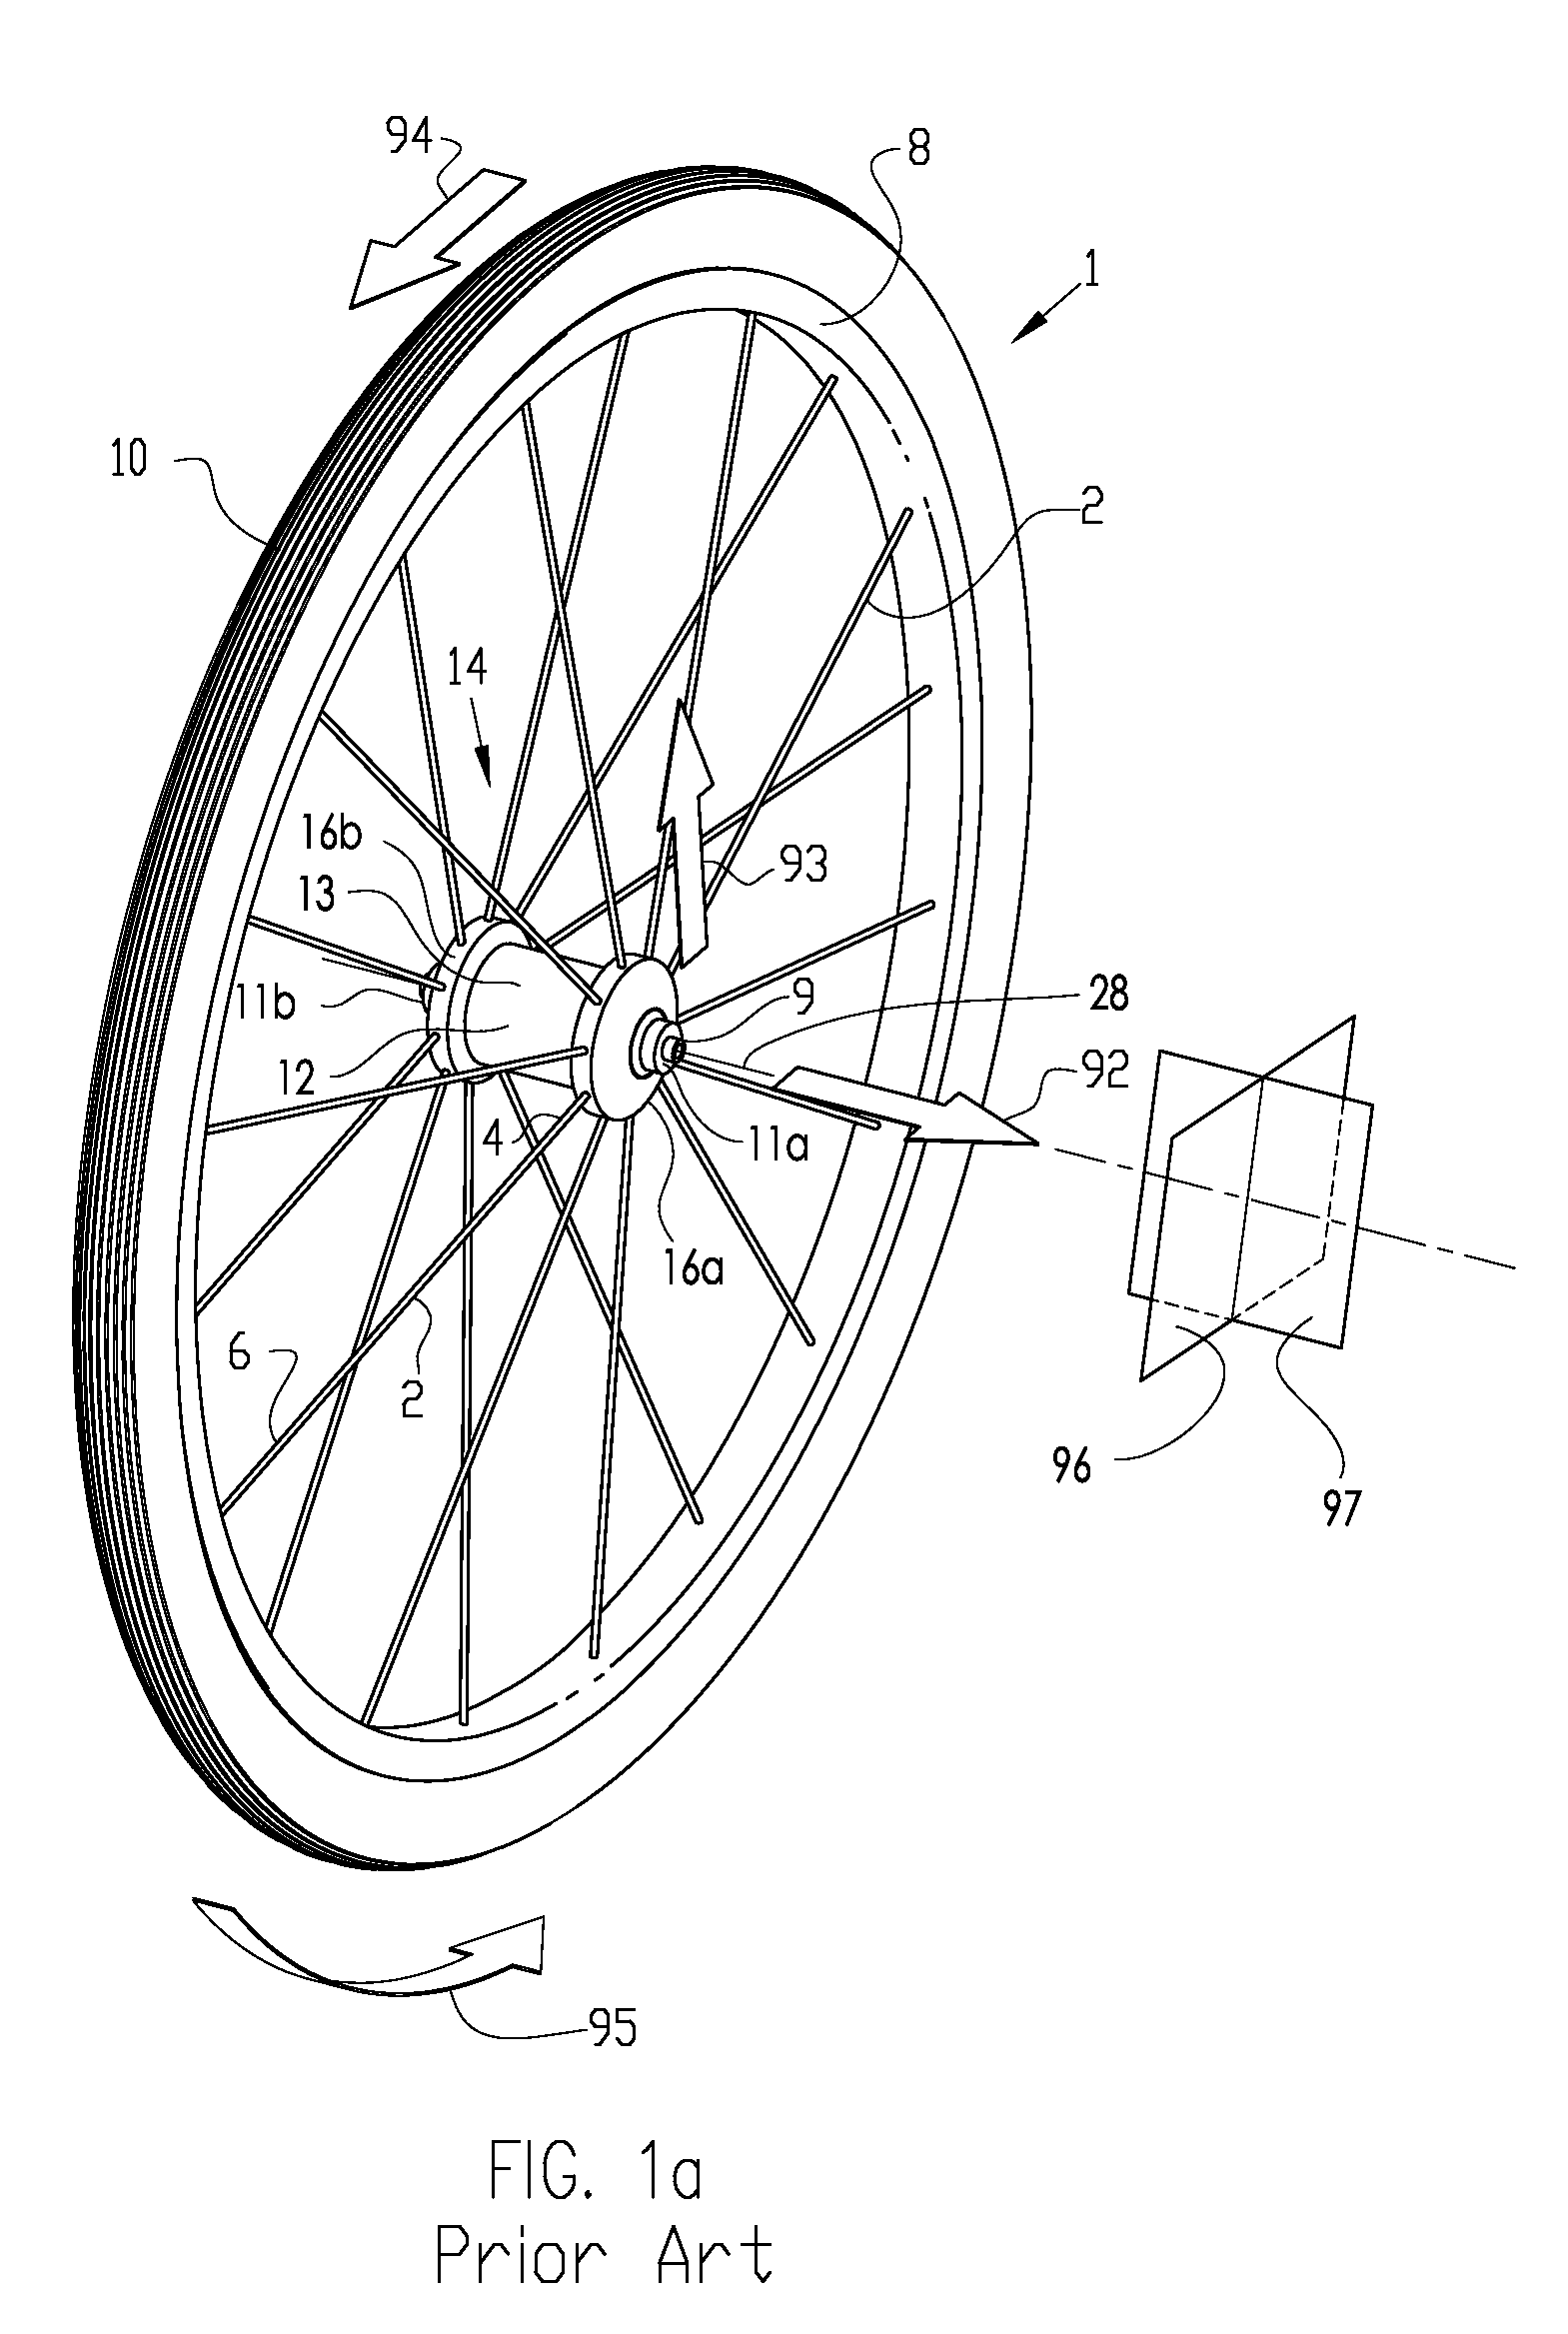 Vehicle wheel rim